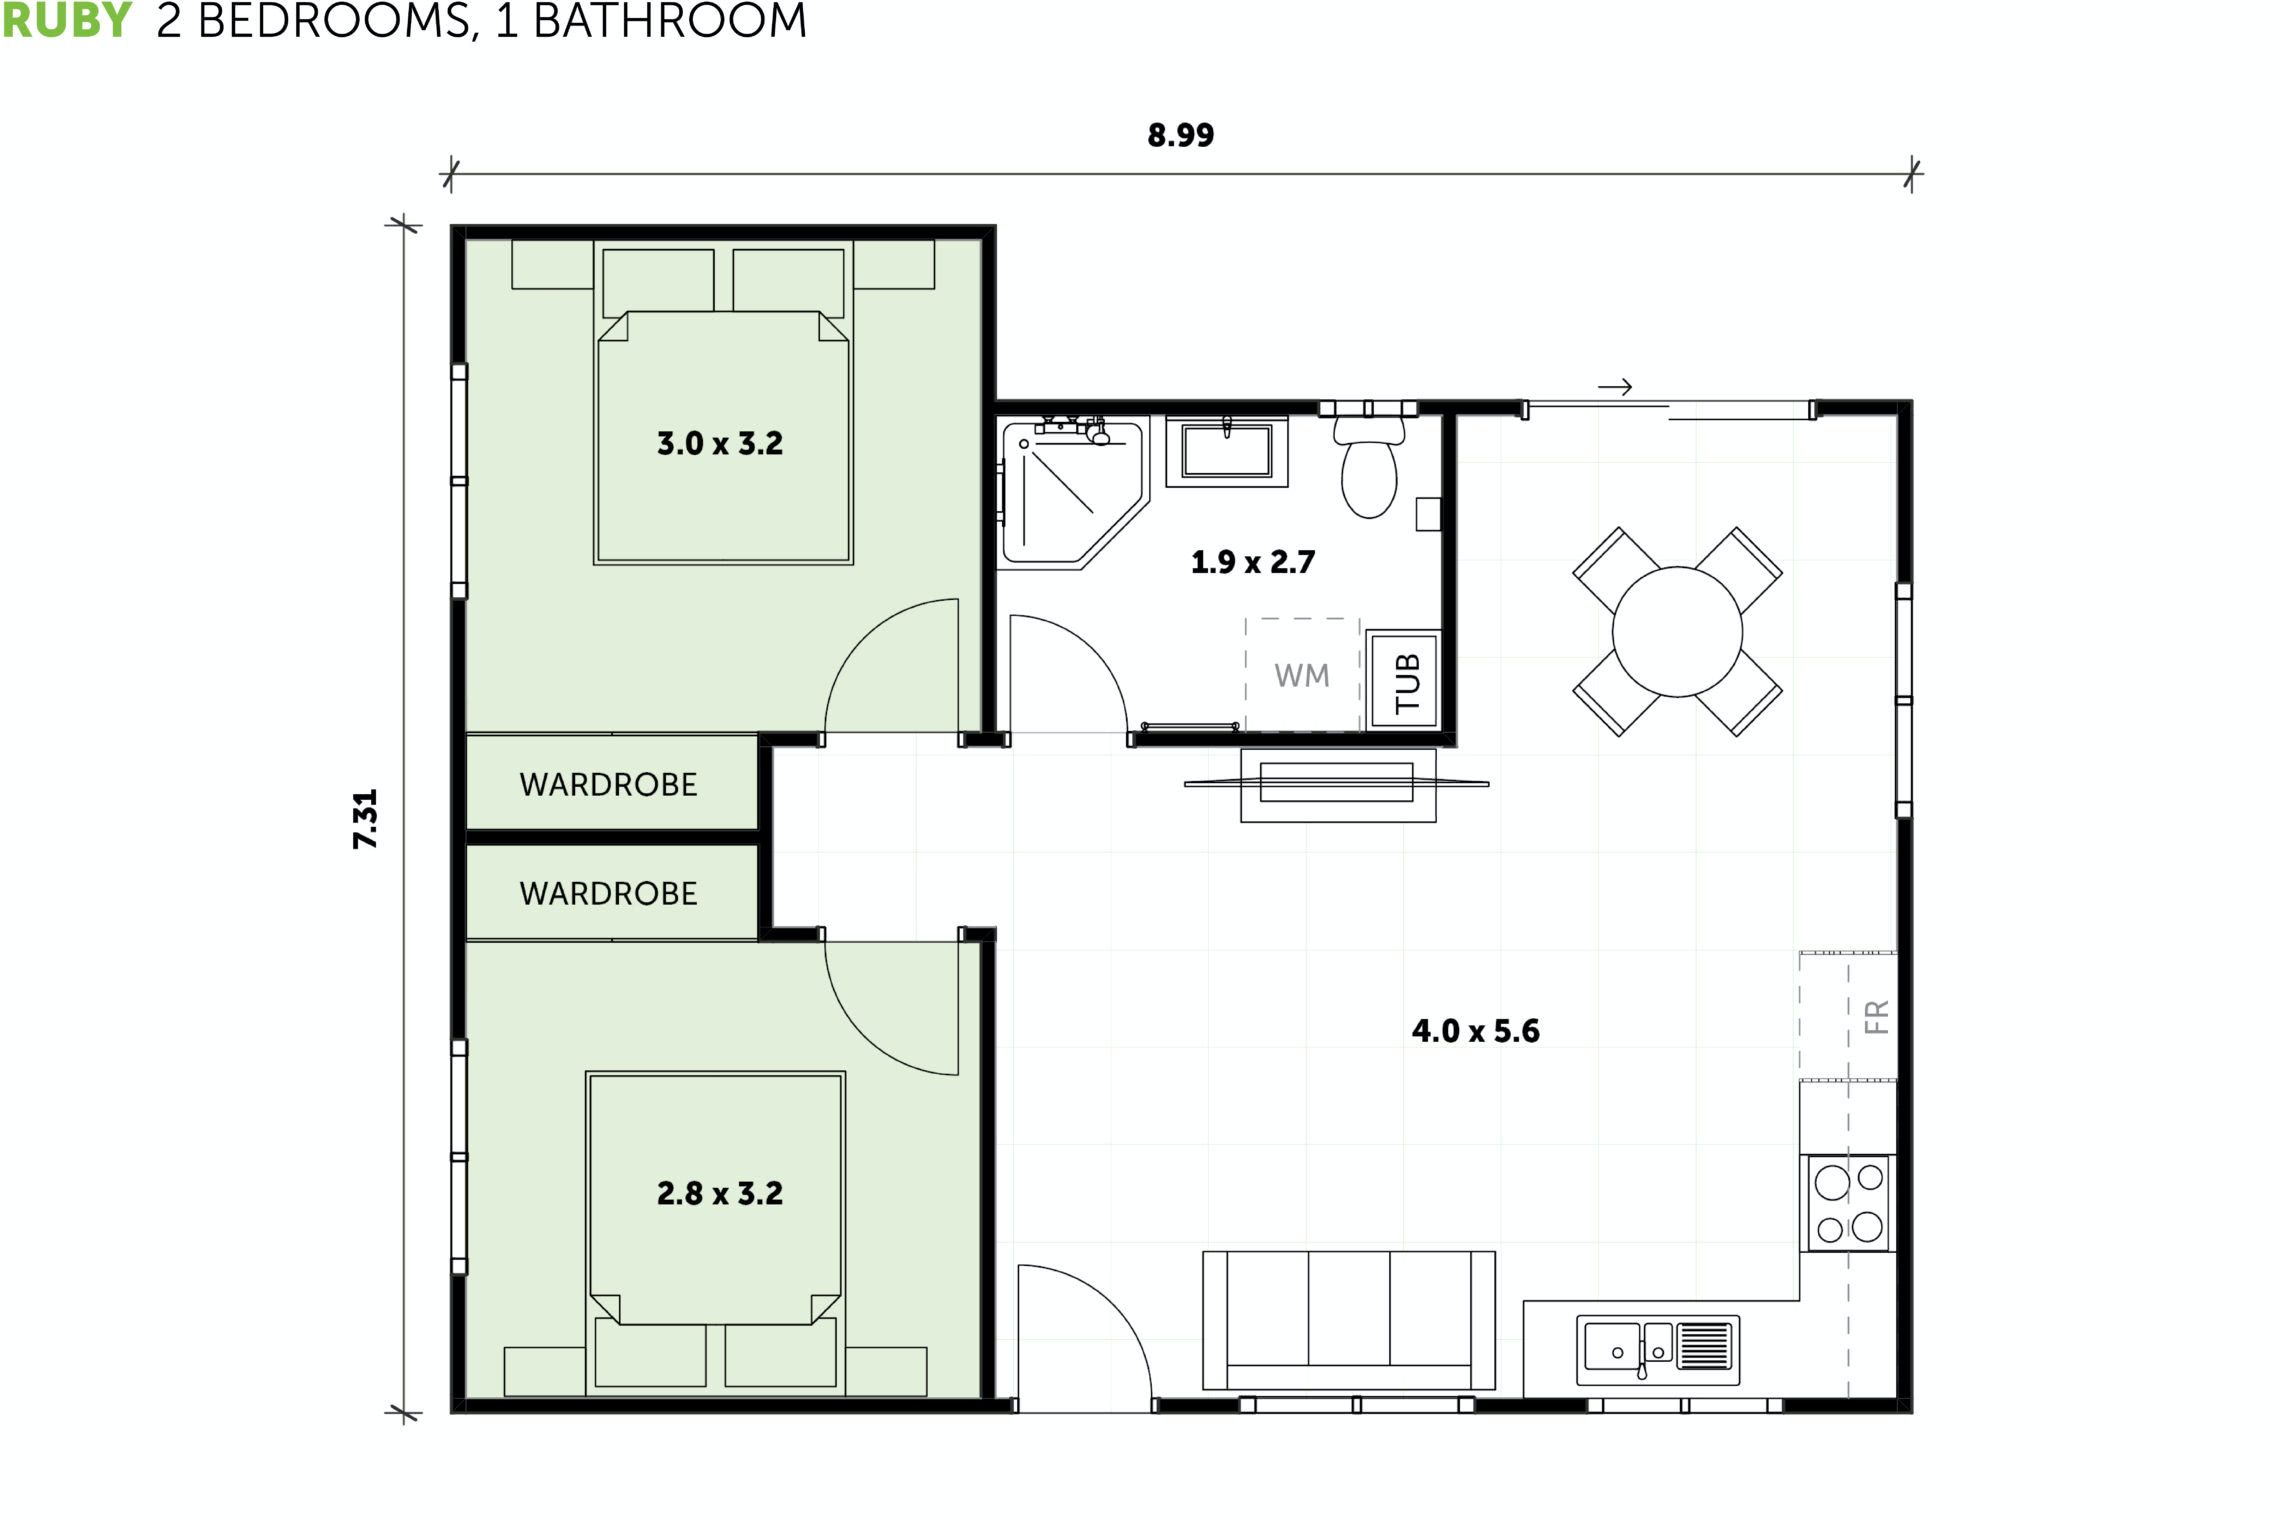 2 bedroom 2 bathroom granny flat floor plans